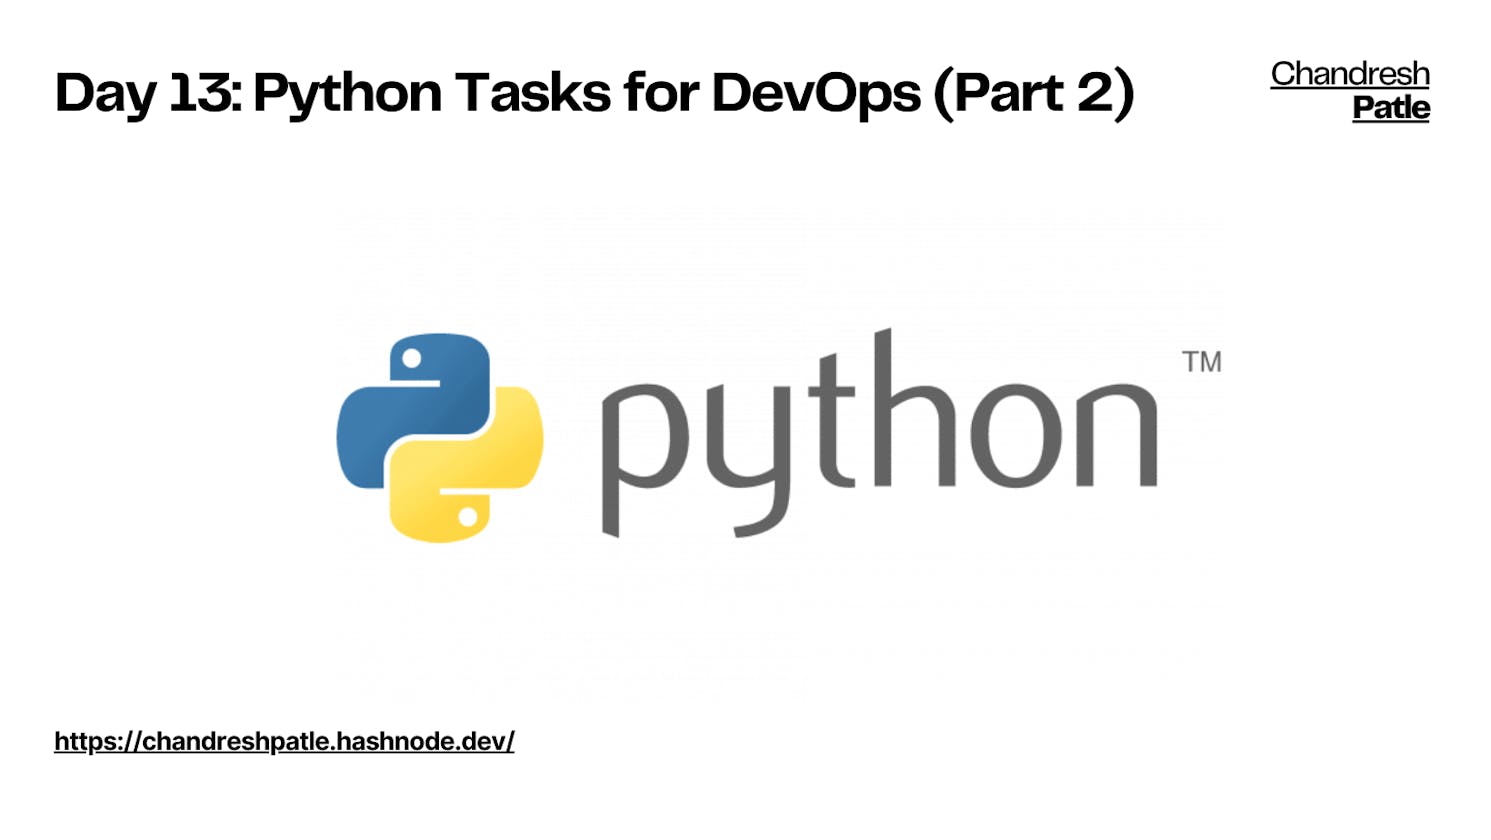 Day 13: Python Tasks for DevOps (Part 2)